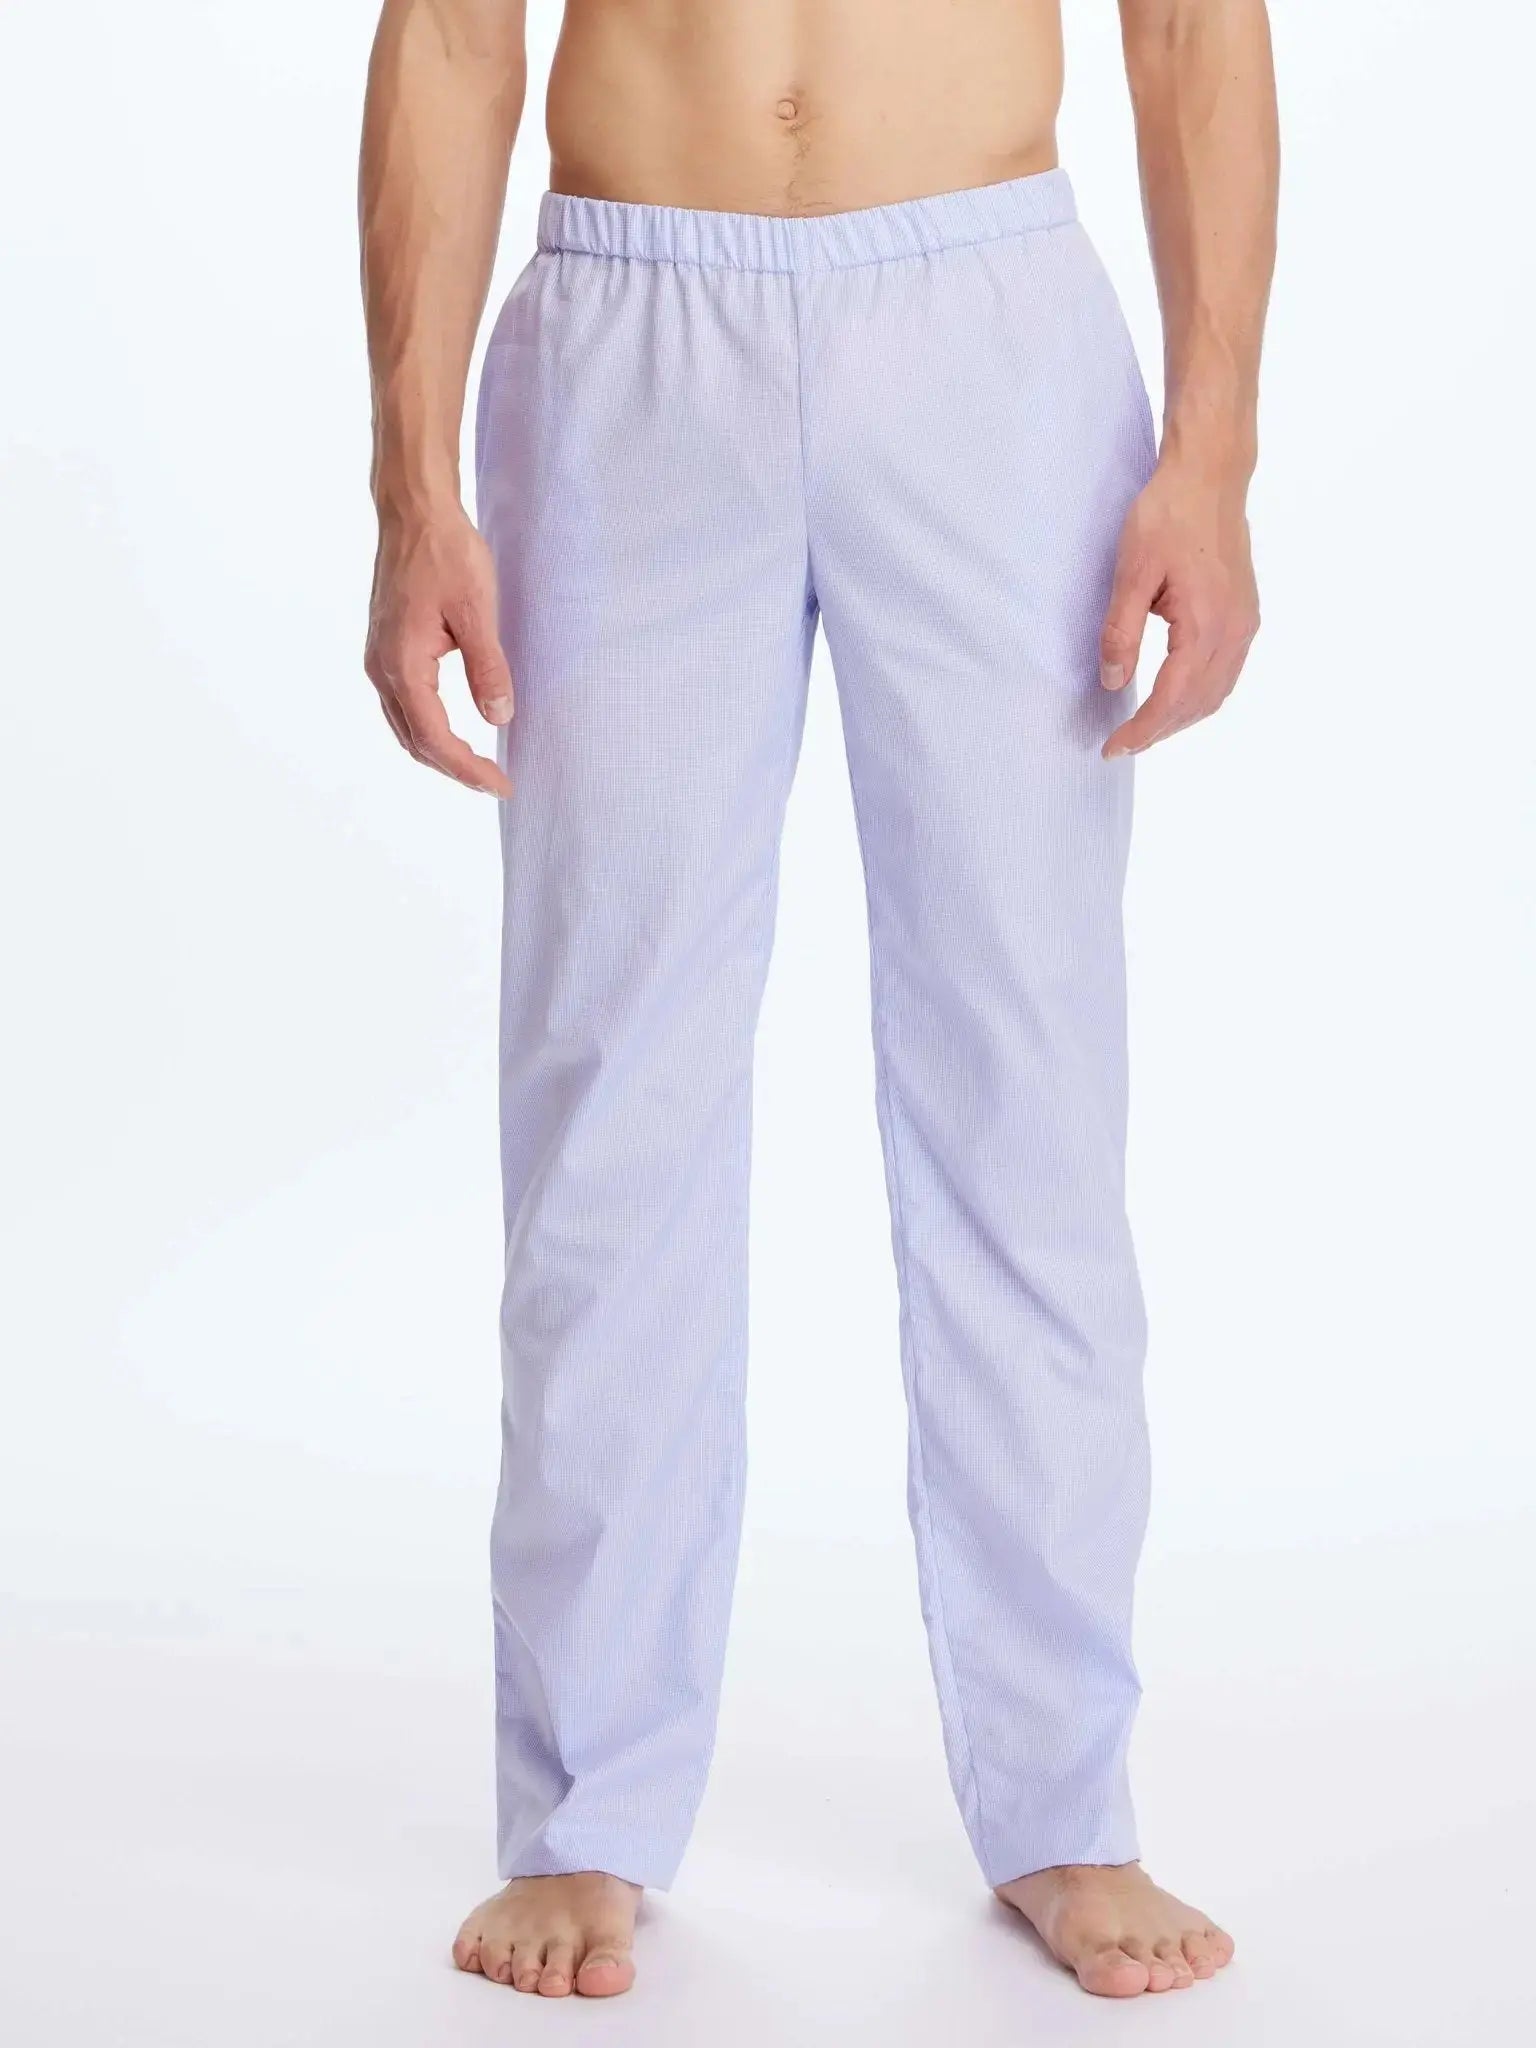 Essential Elements 3 Pack: Mens Cotton Sleep Pants - 100% Cotton Jersey  Lounge Casual Sleep Bottoms PJ Pajama Pants - Walmart.com